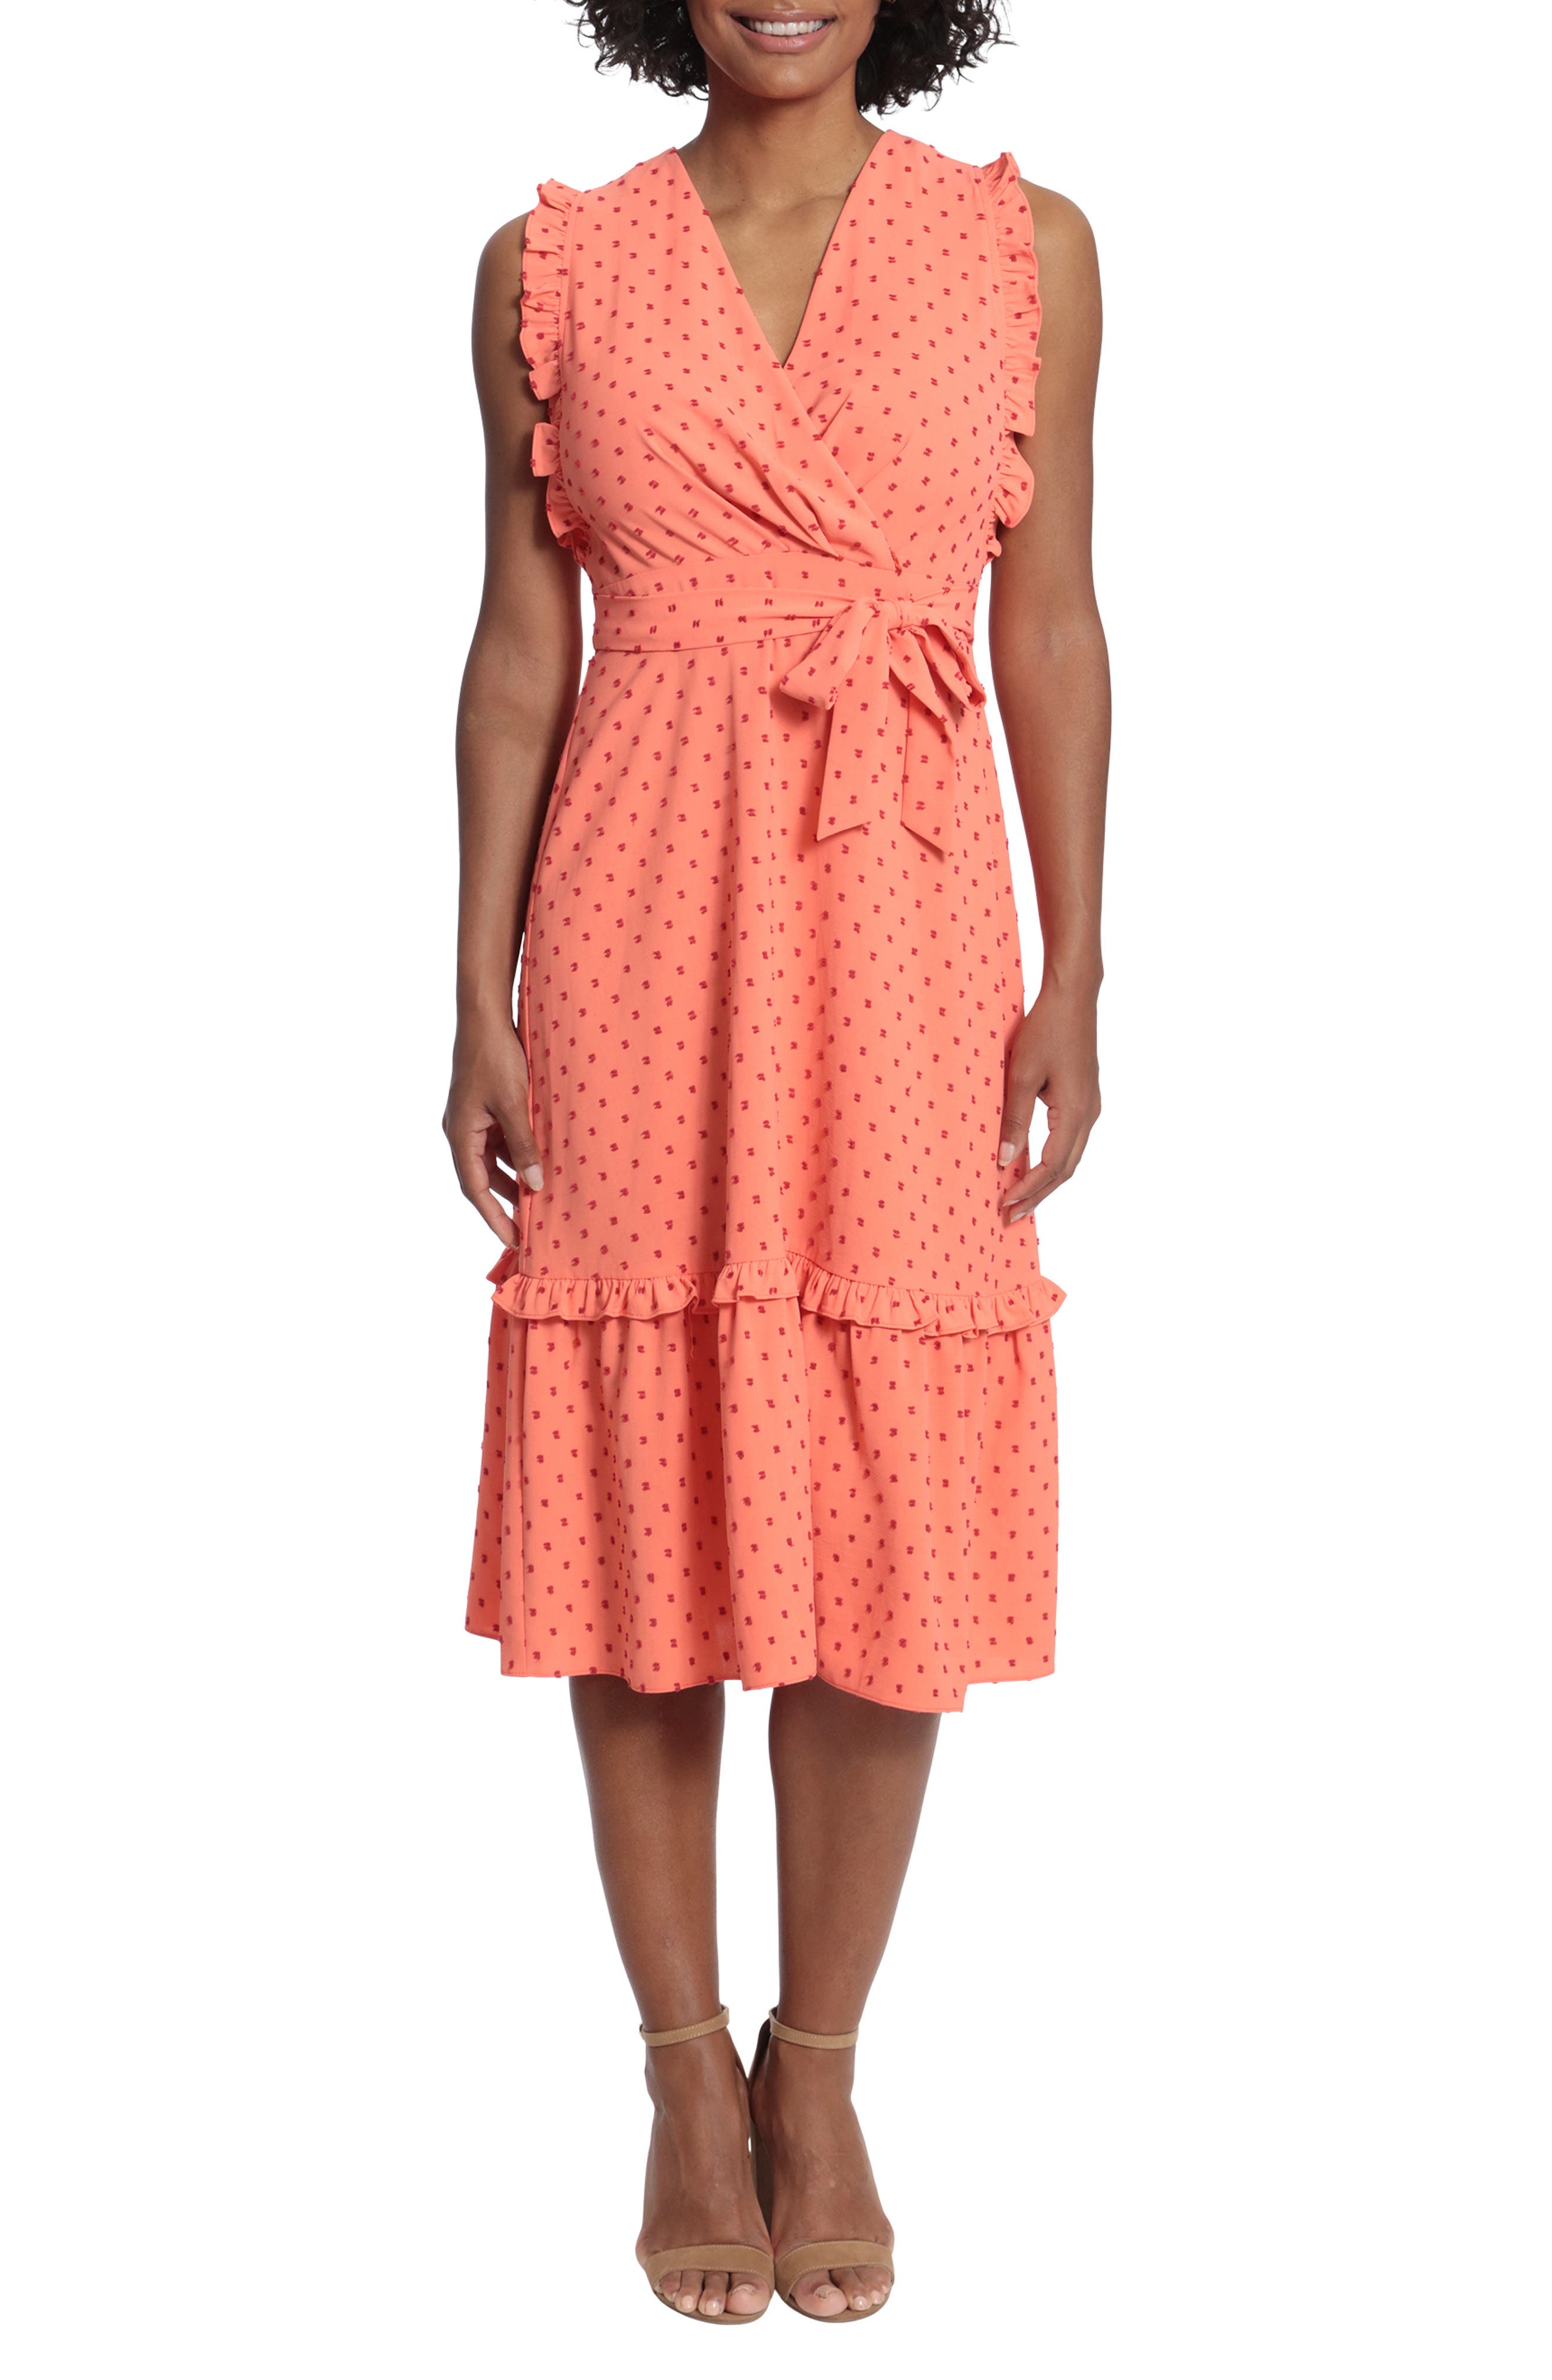 Coral Petite Dresses ☀ Jumpsuits for ...